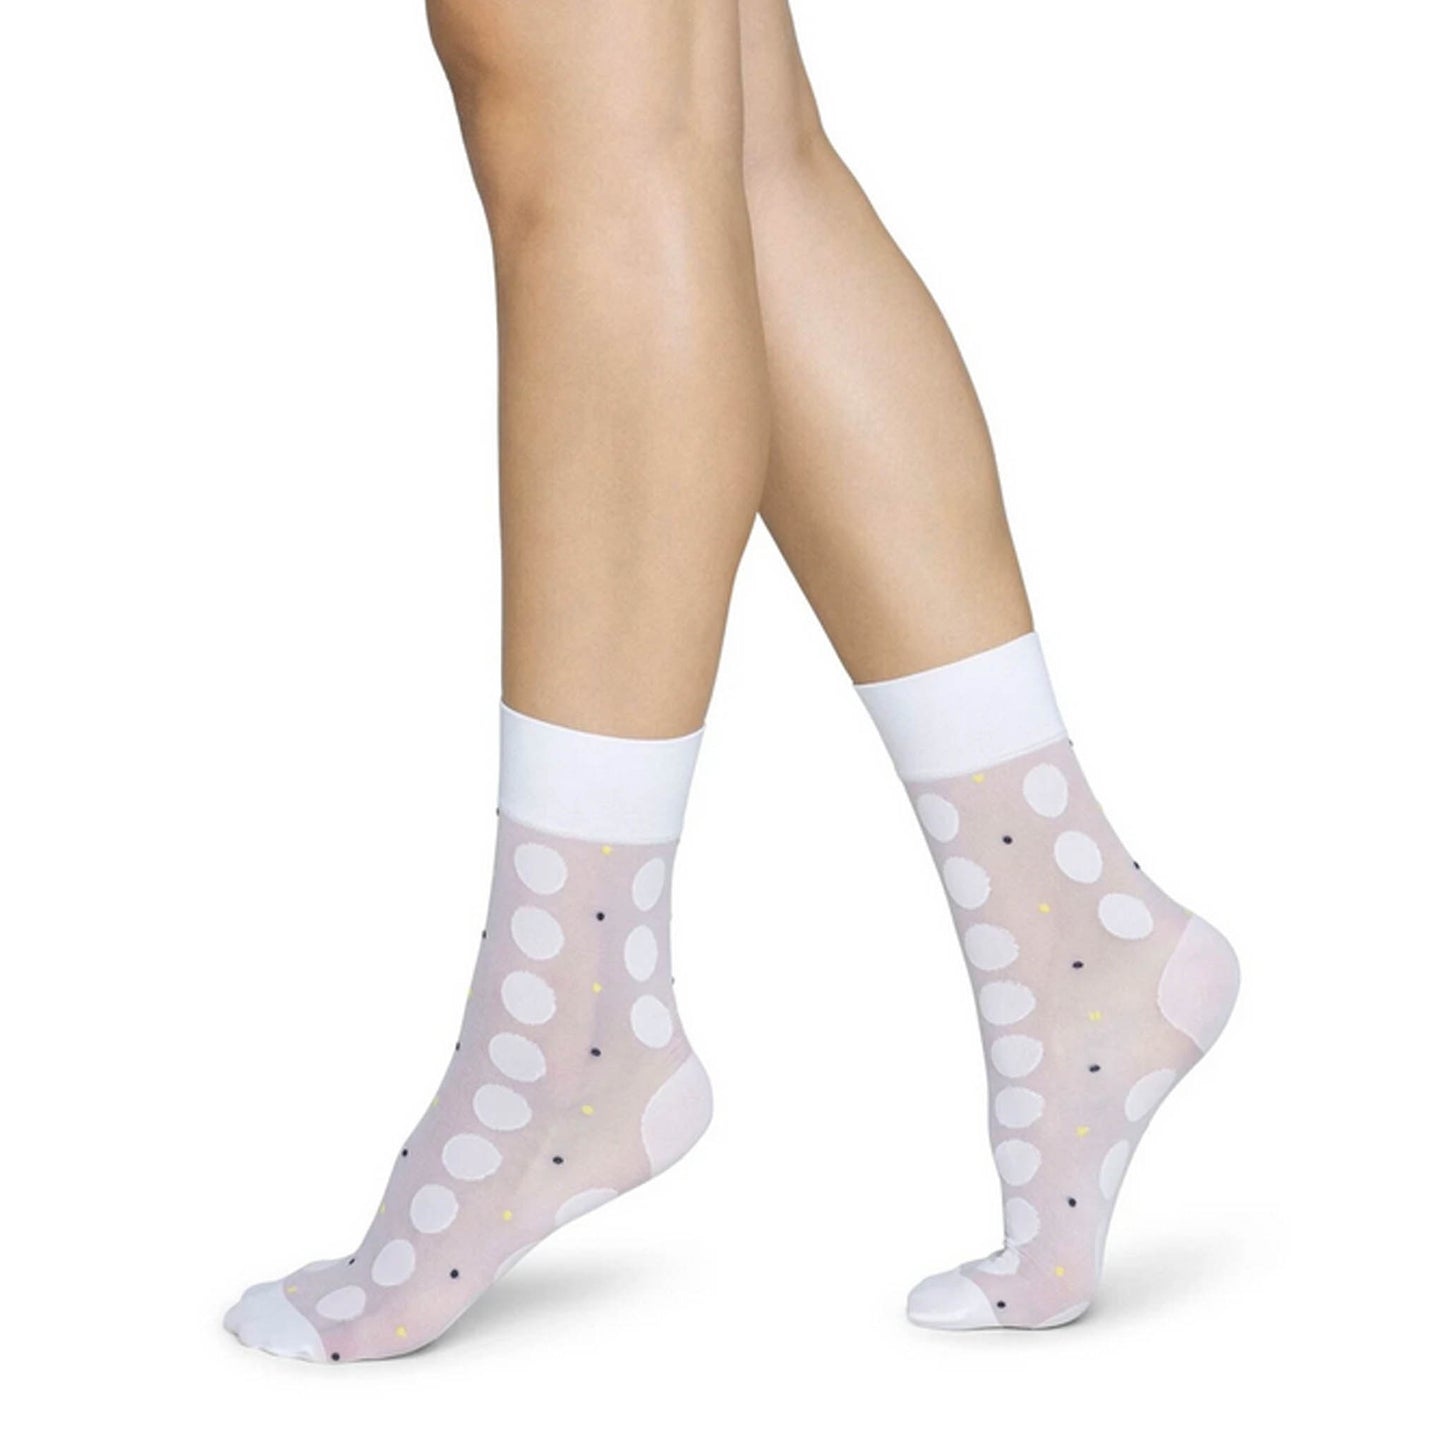 Sheer White Slow Fashion Socks